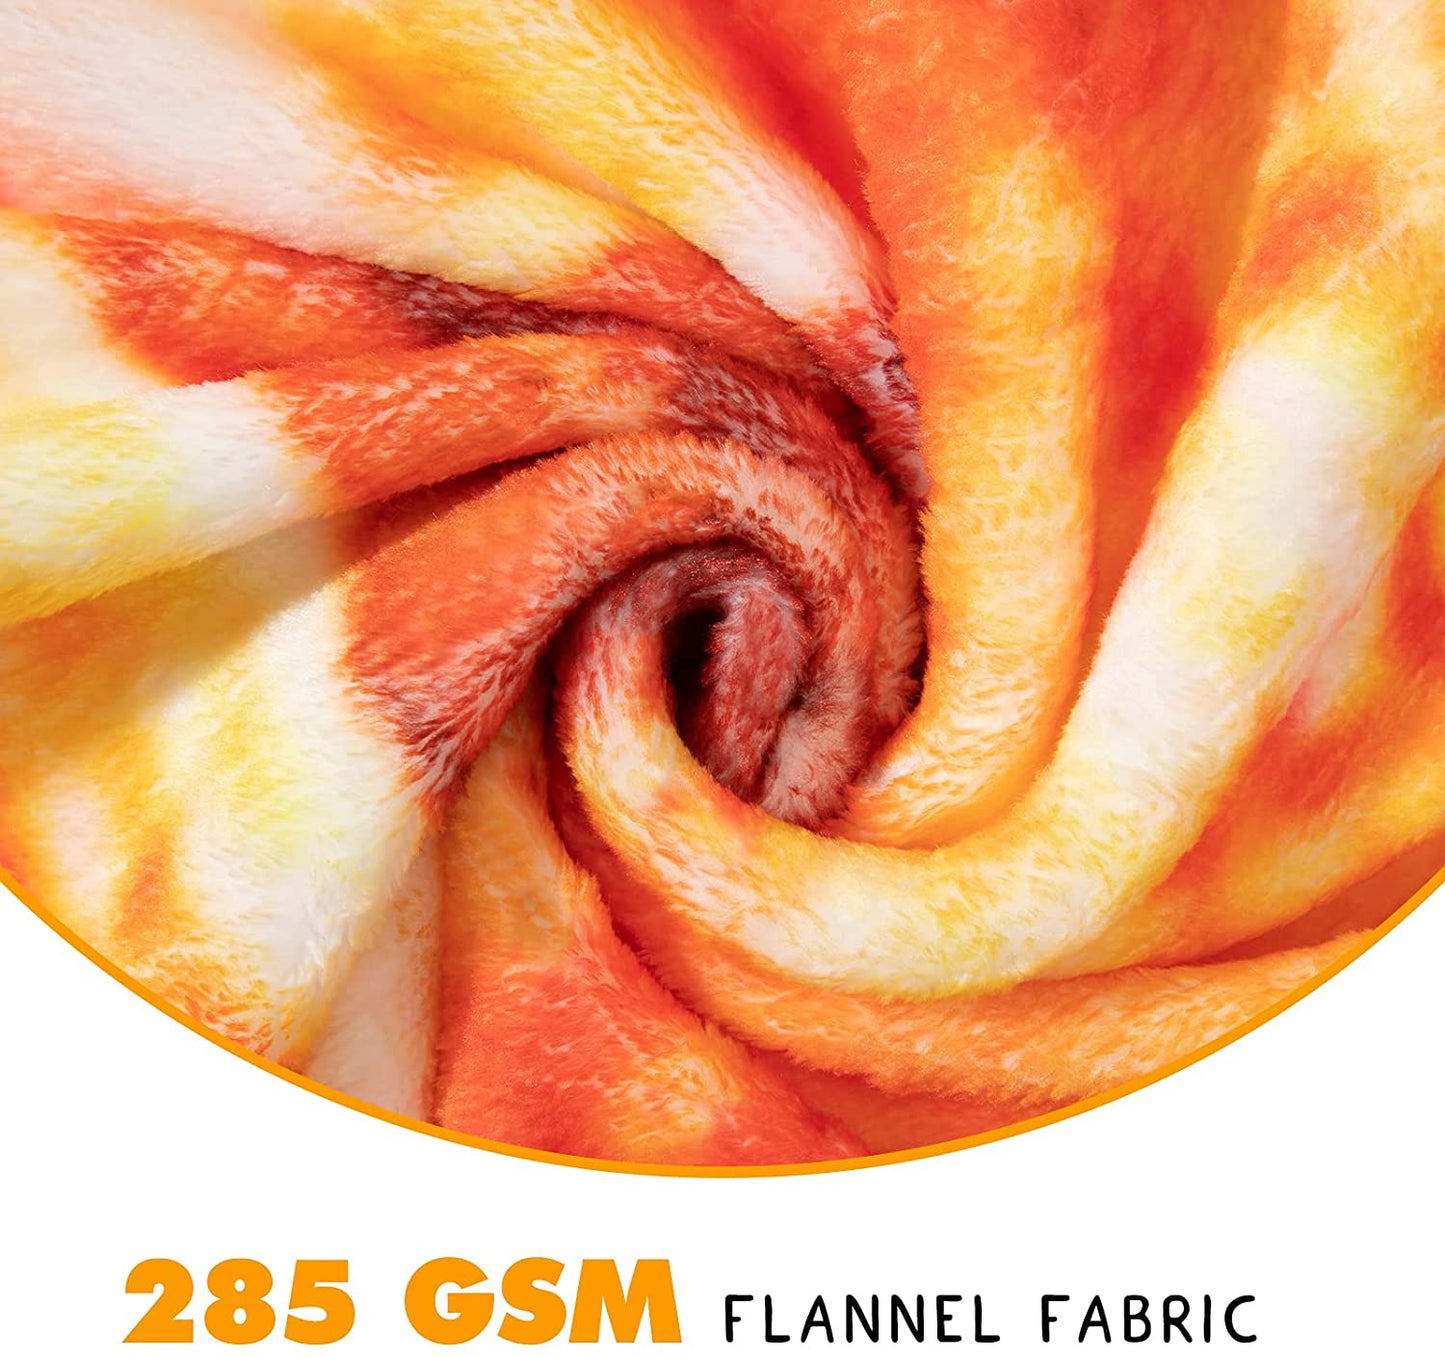 Apple Pie Blanket, Food Flour Tortilla Throw Blankets, Soft and Comfortable Giant Round Beach Blanket (Orange, 80 inches)